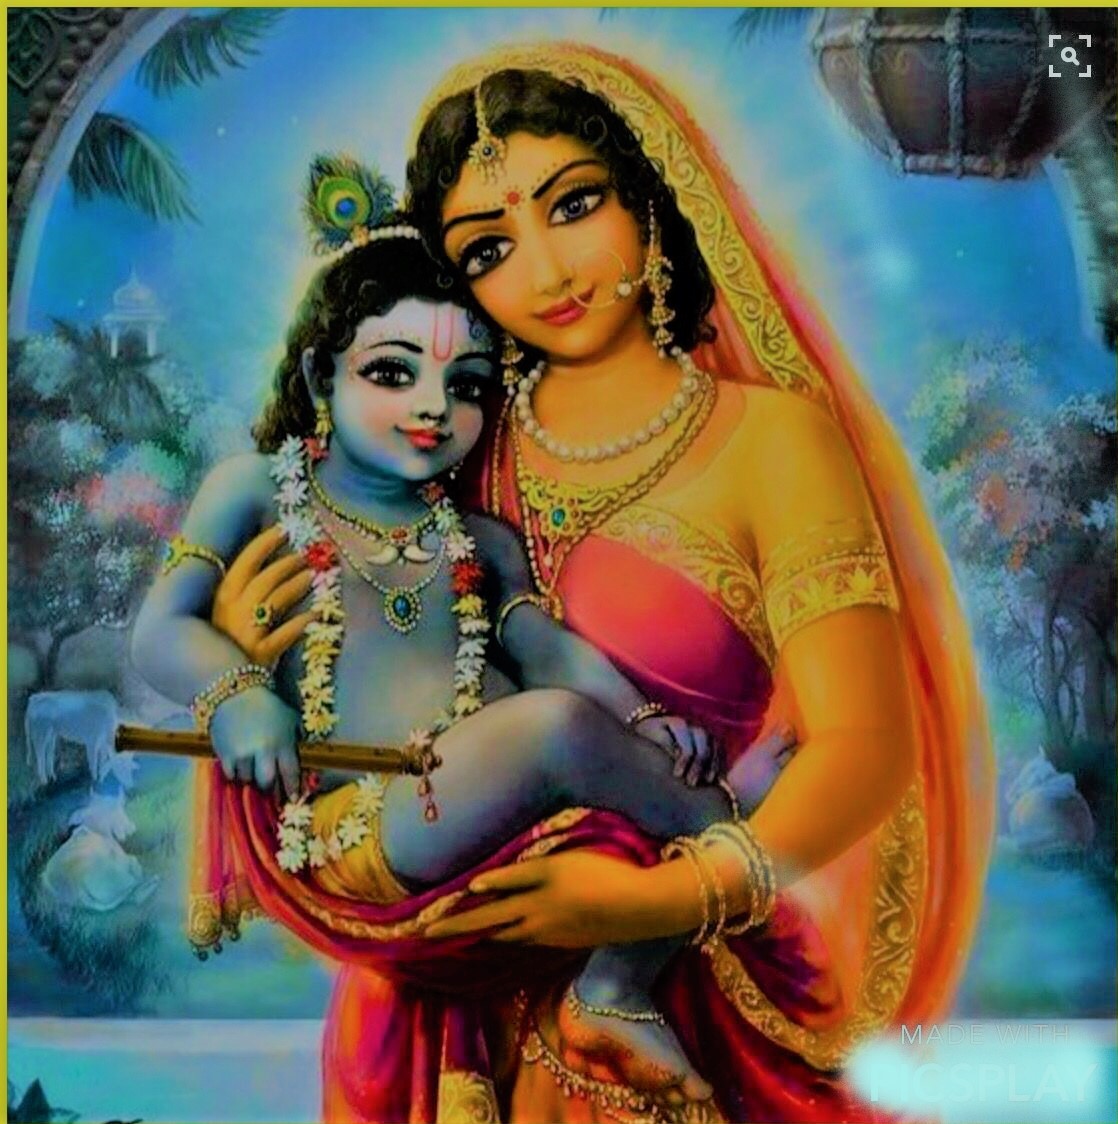 Soak in the beauty of baby Krishna - For the Pleasure of Lord Krishna